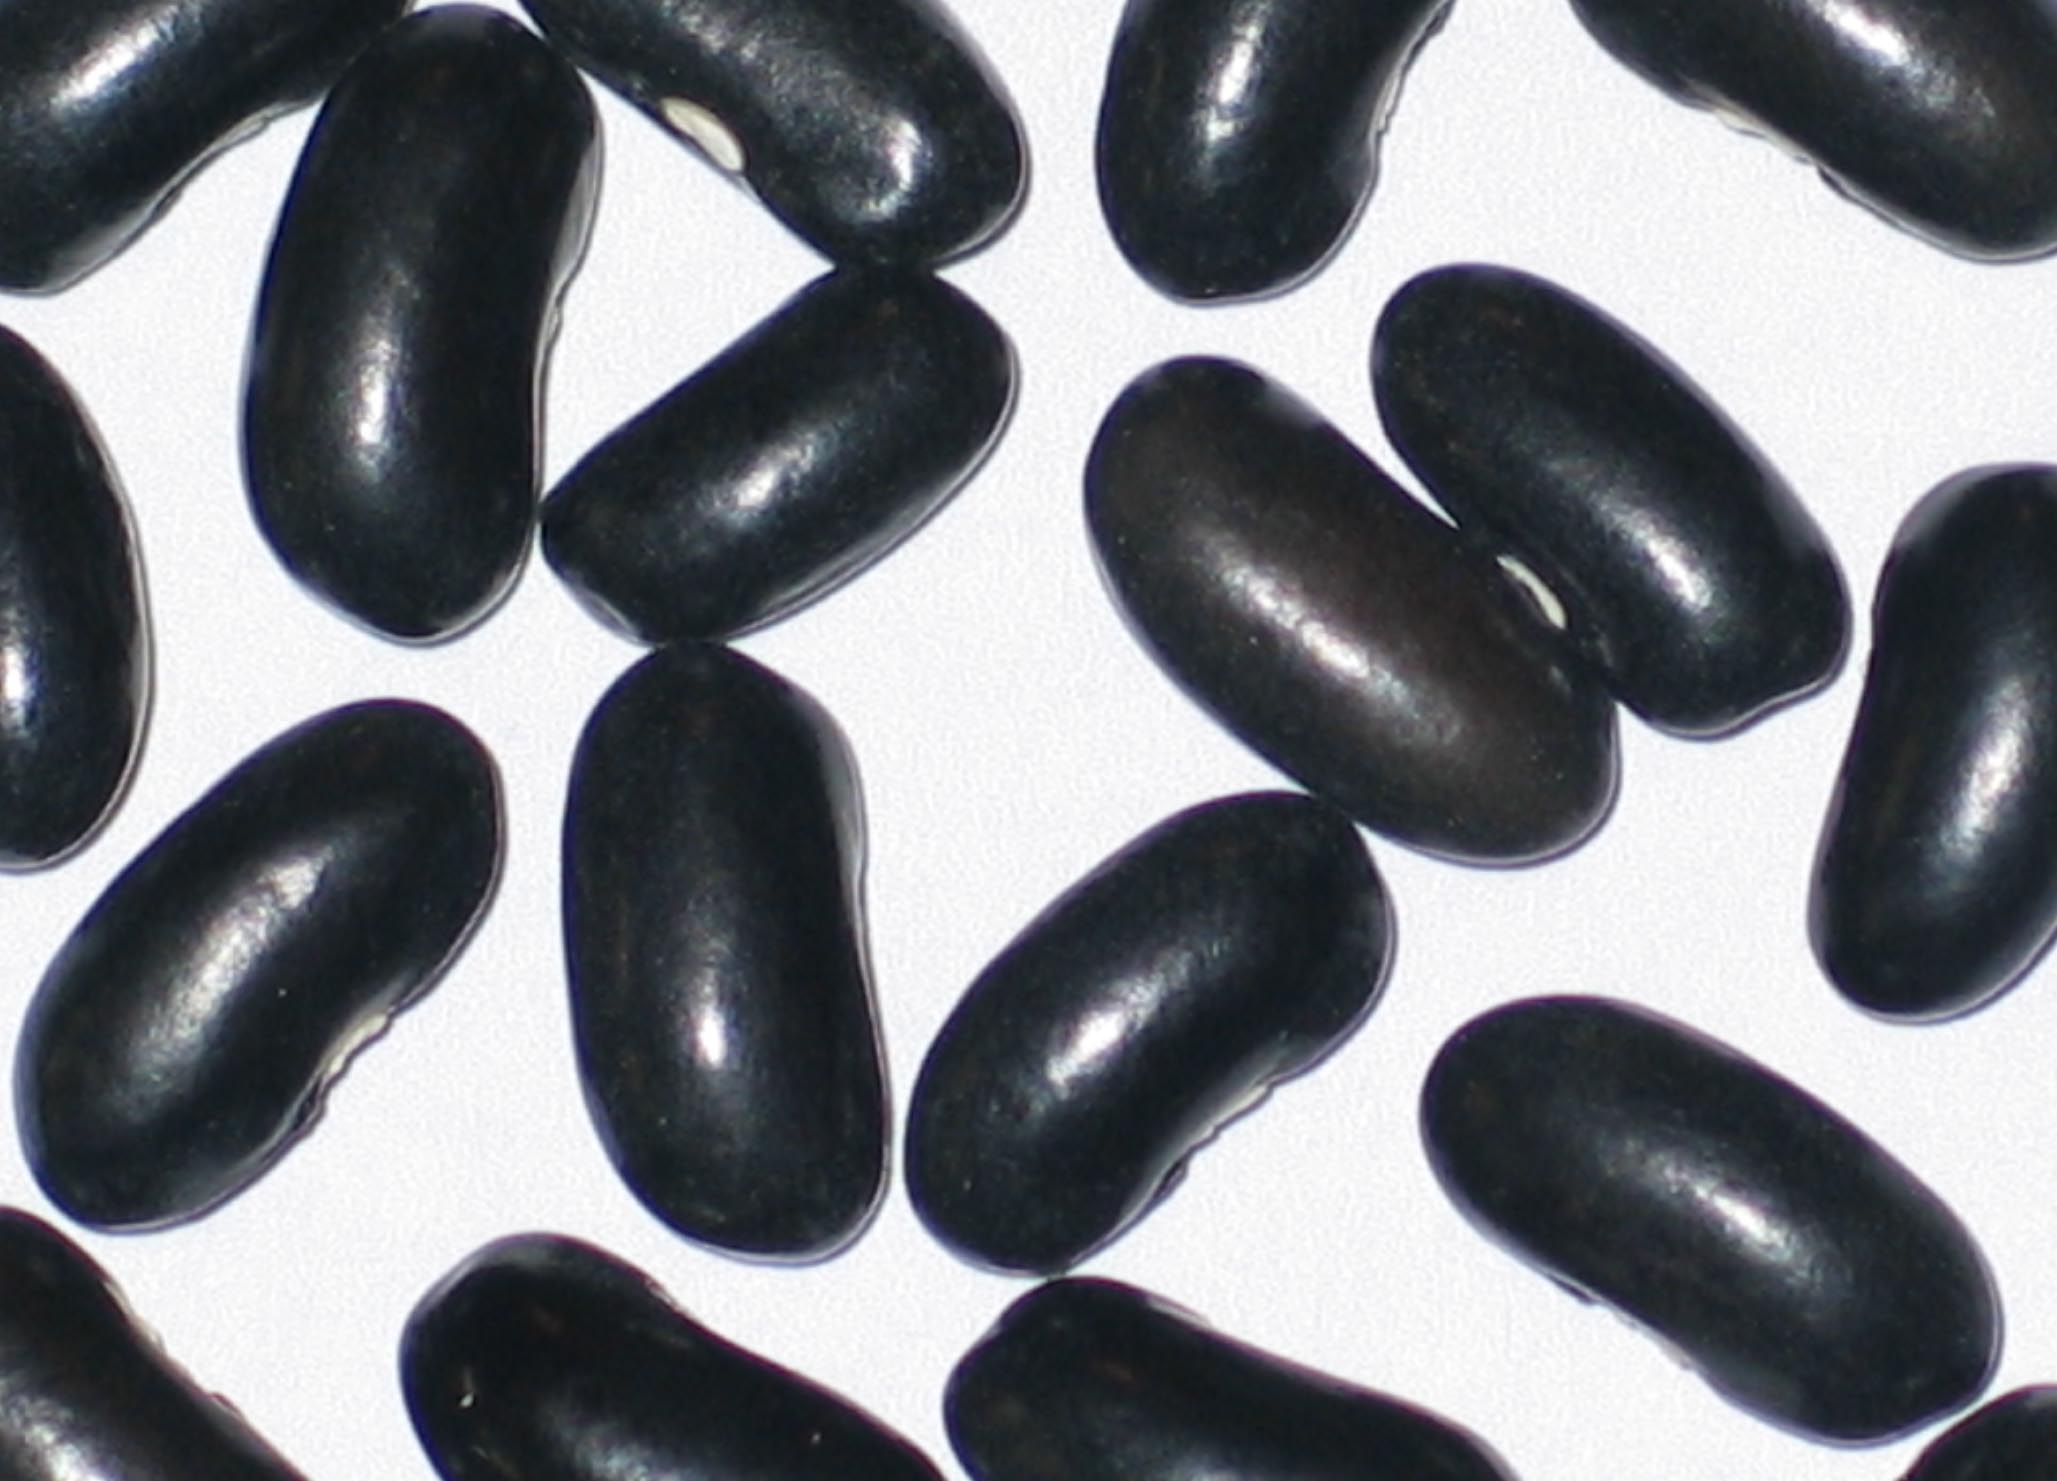 image of Cherokee Wax beans